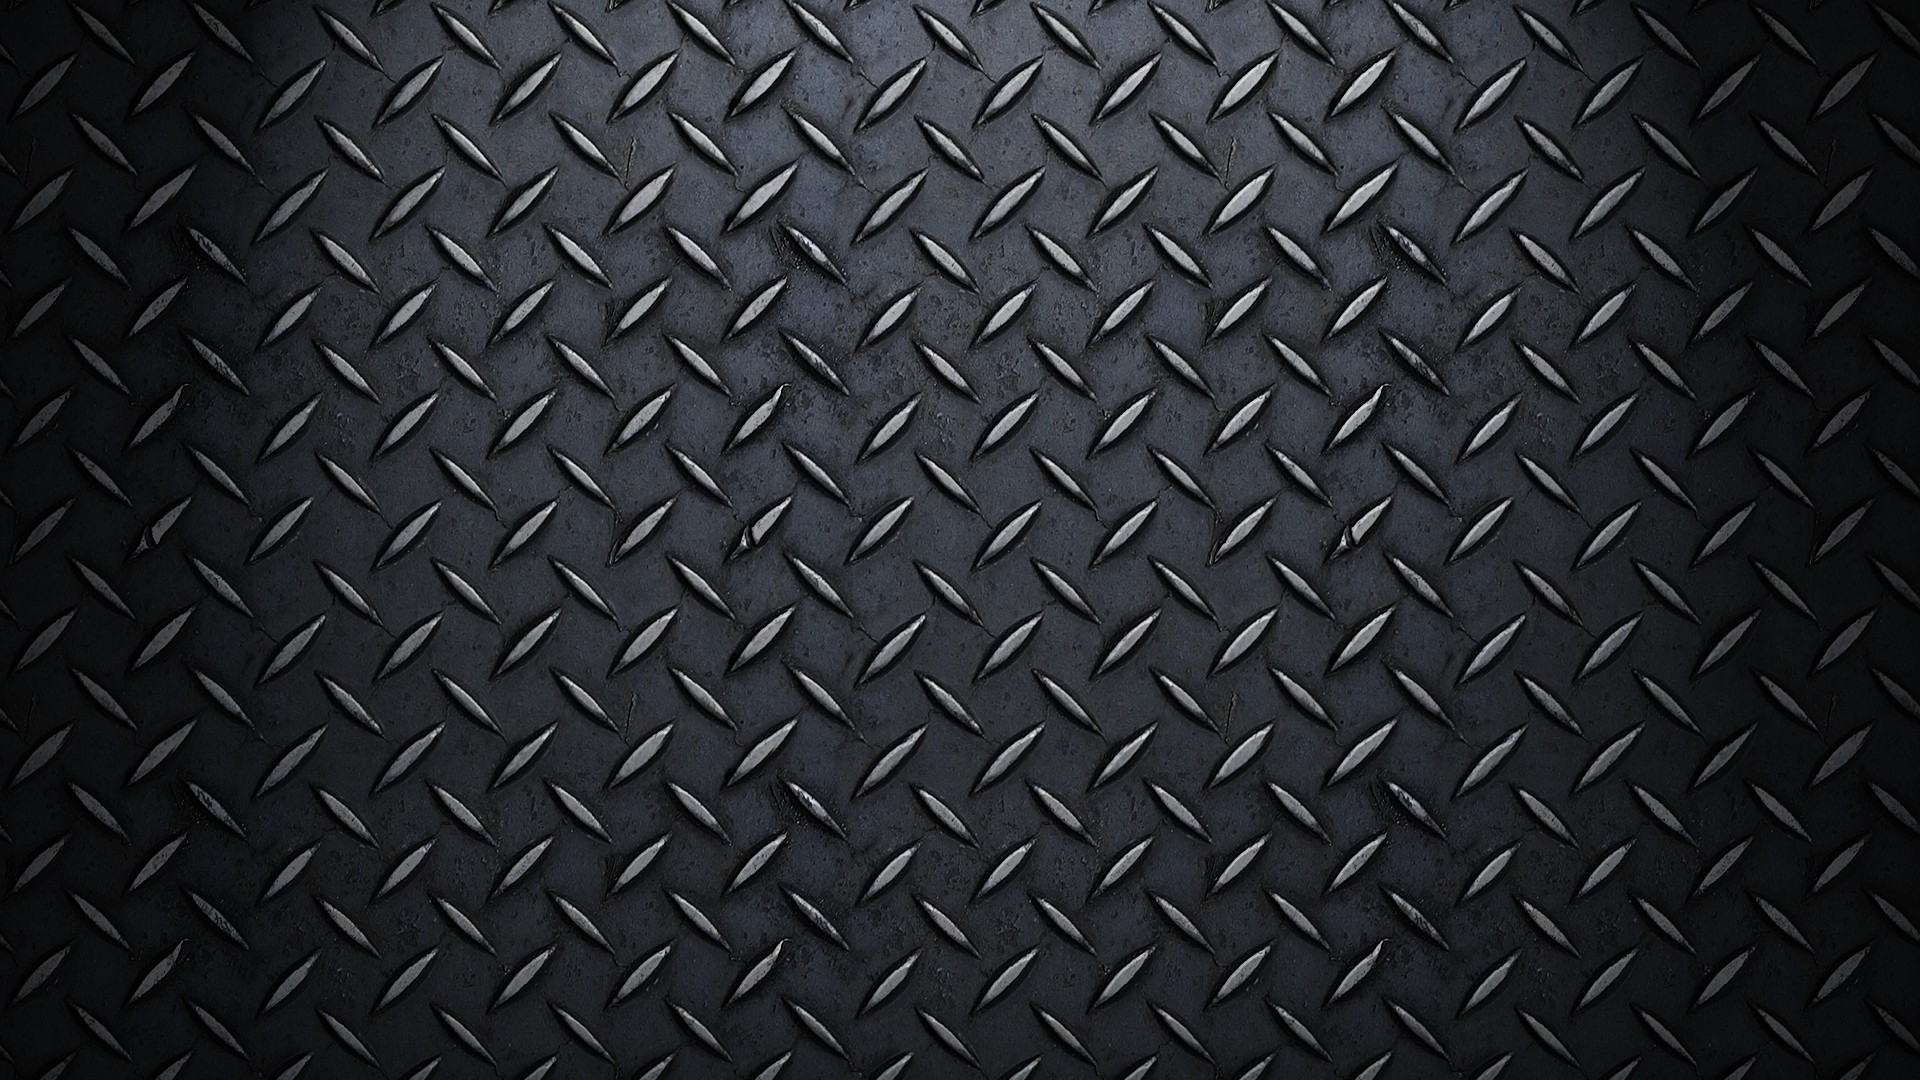 General 1920x1080 diamond plate pattern steel metal texture